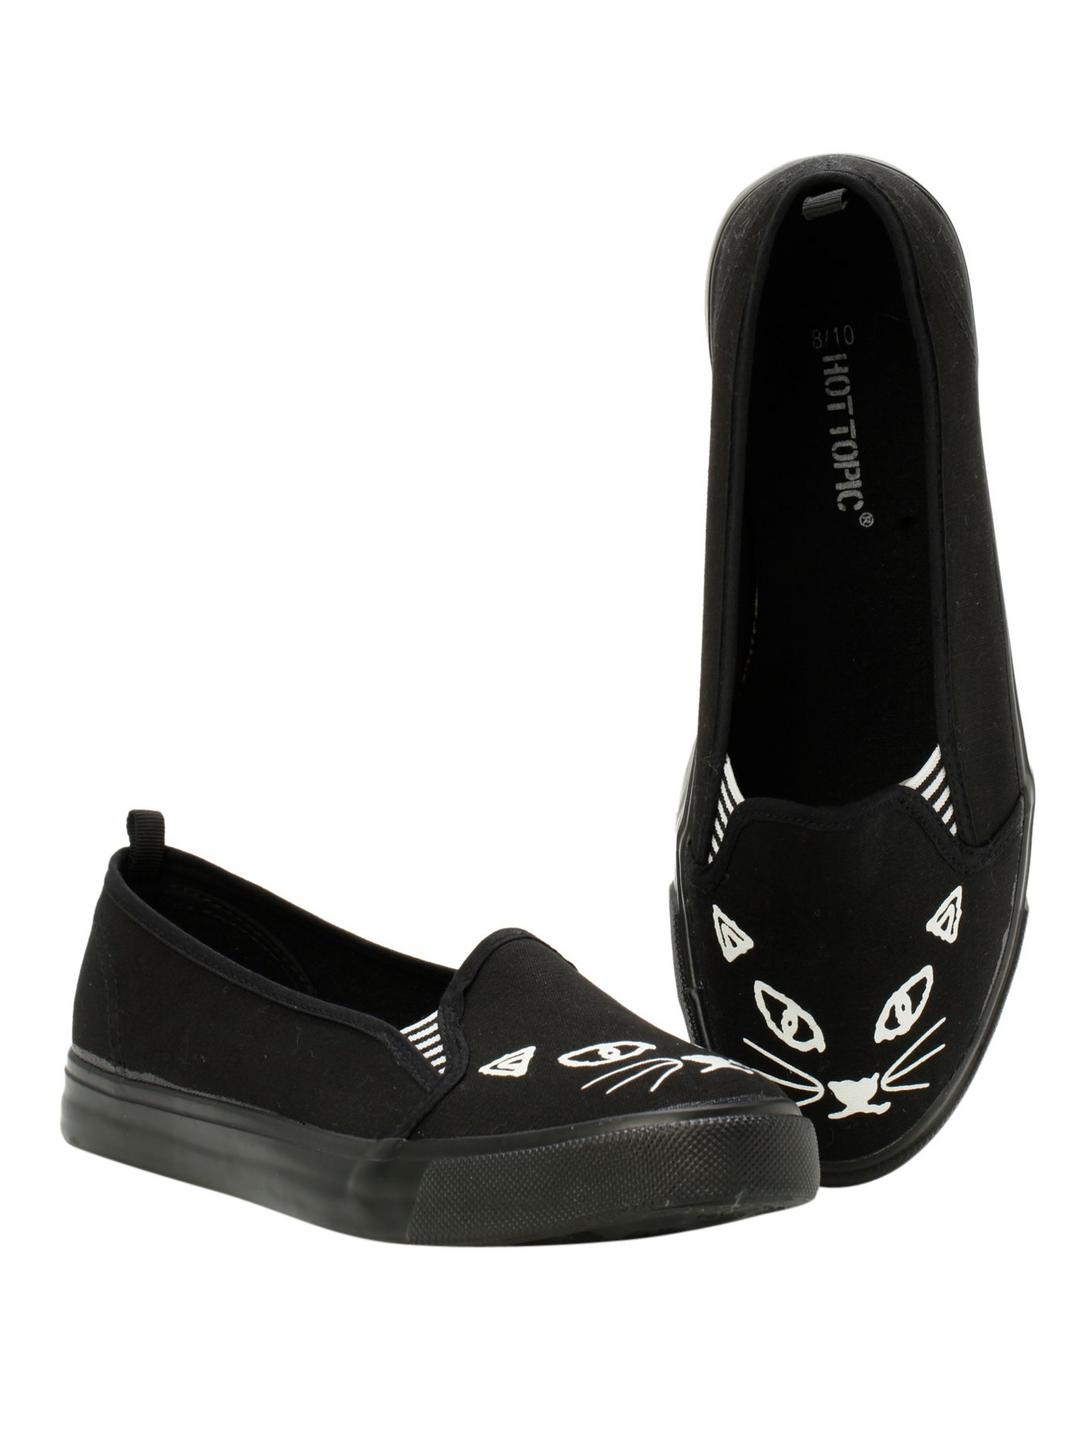 Black Cat Slip-Ons, BLACK, hi-res